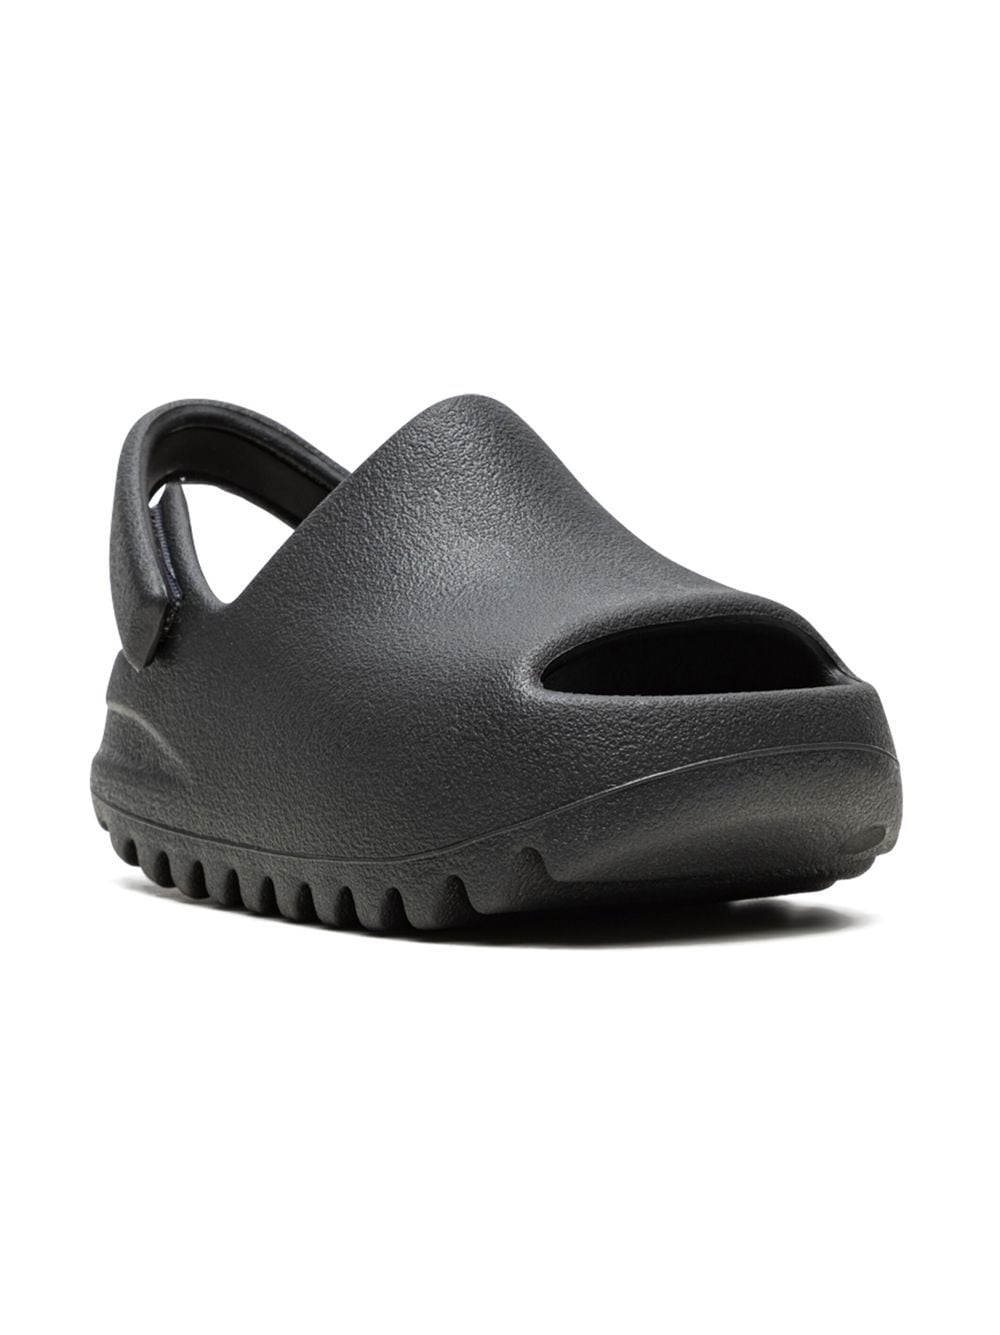 Adidas Yeezy Kids Yeezy Slide Infant "Onyx" sandals - Black von Adidas Yeezy Kids